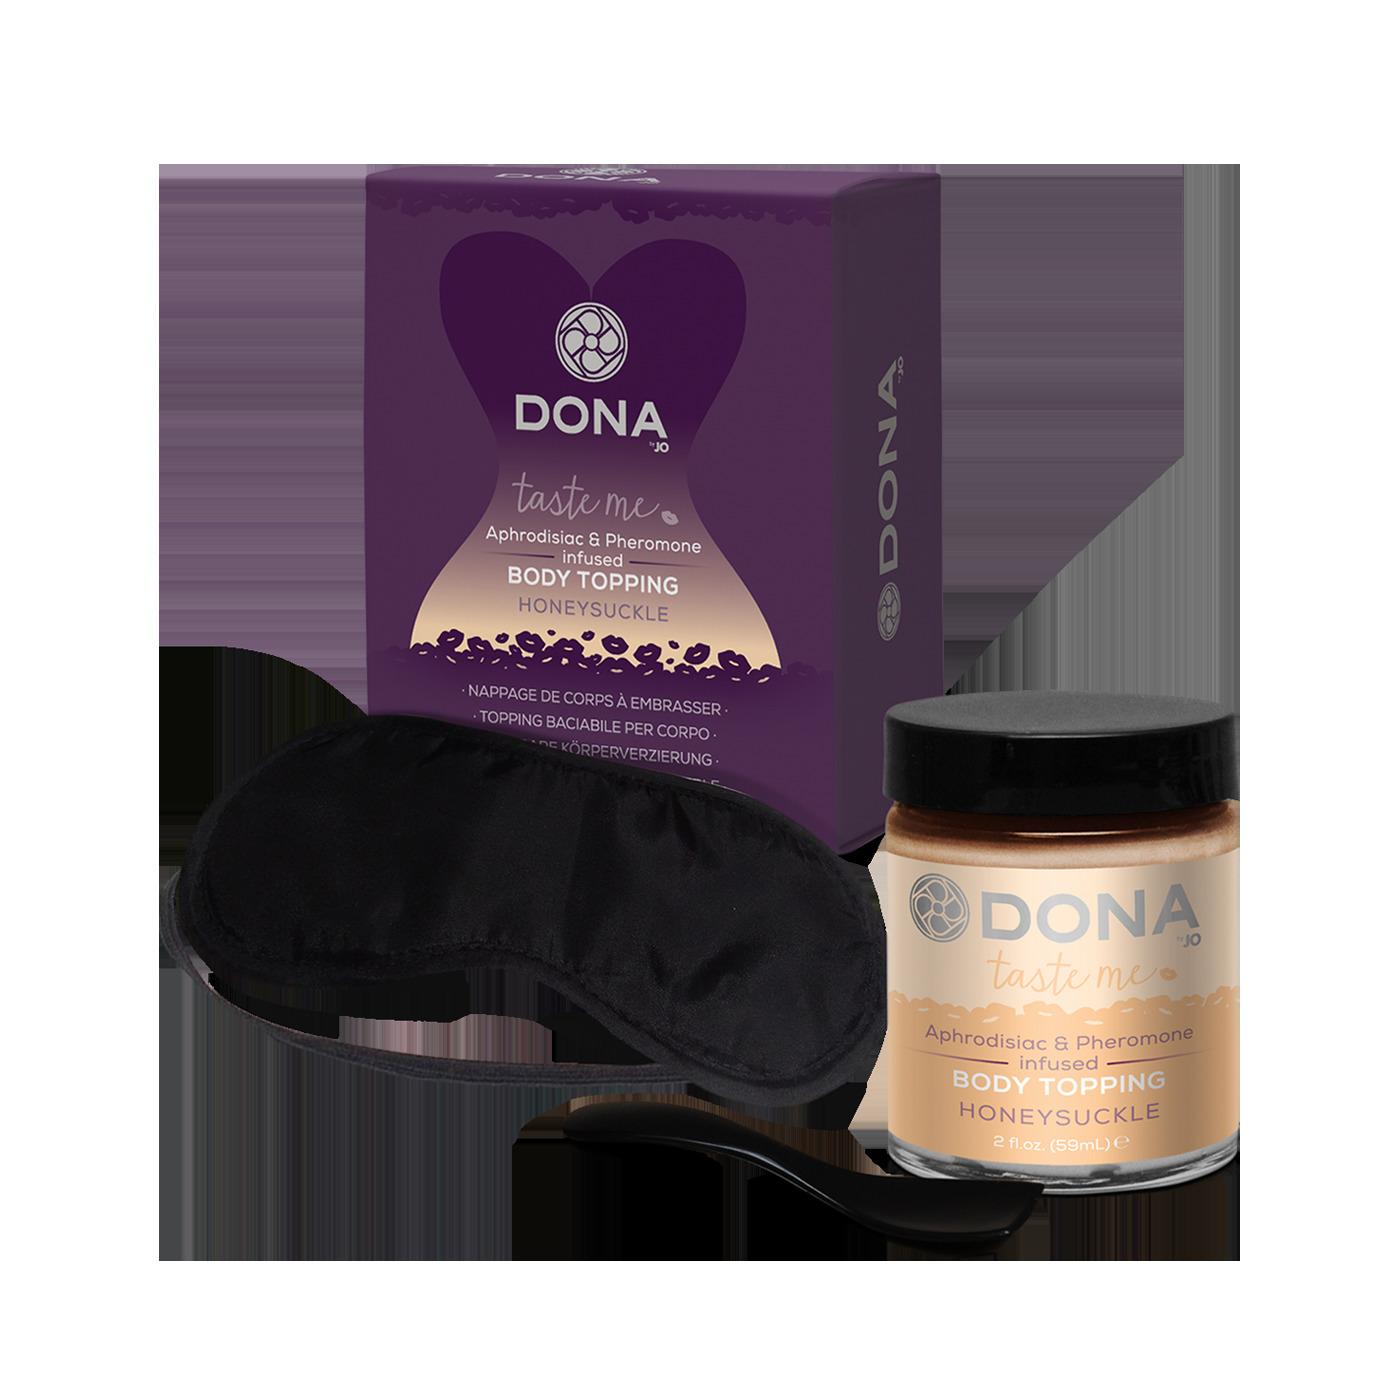 DONA by JO, Body Topping Honeysuckle, Aphrodisiac & Pheromone Infused, 59 ml (2 oz)